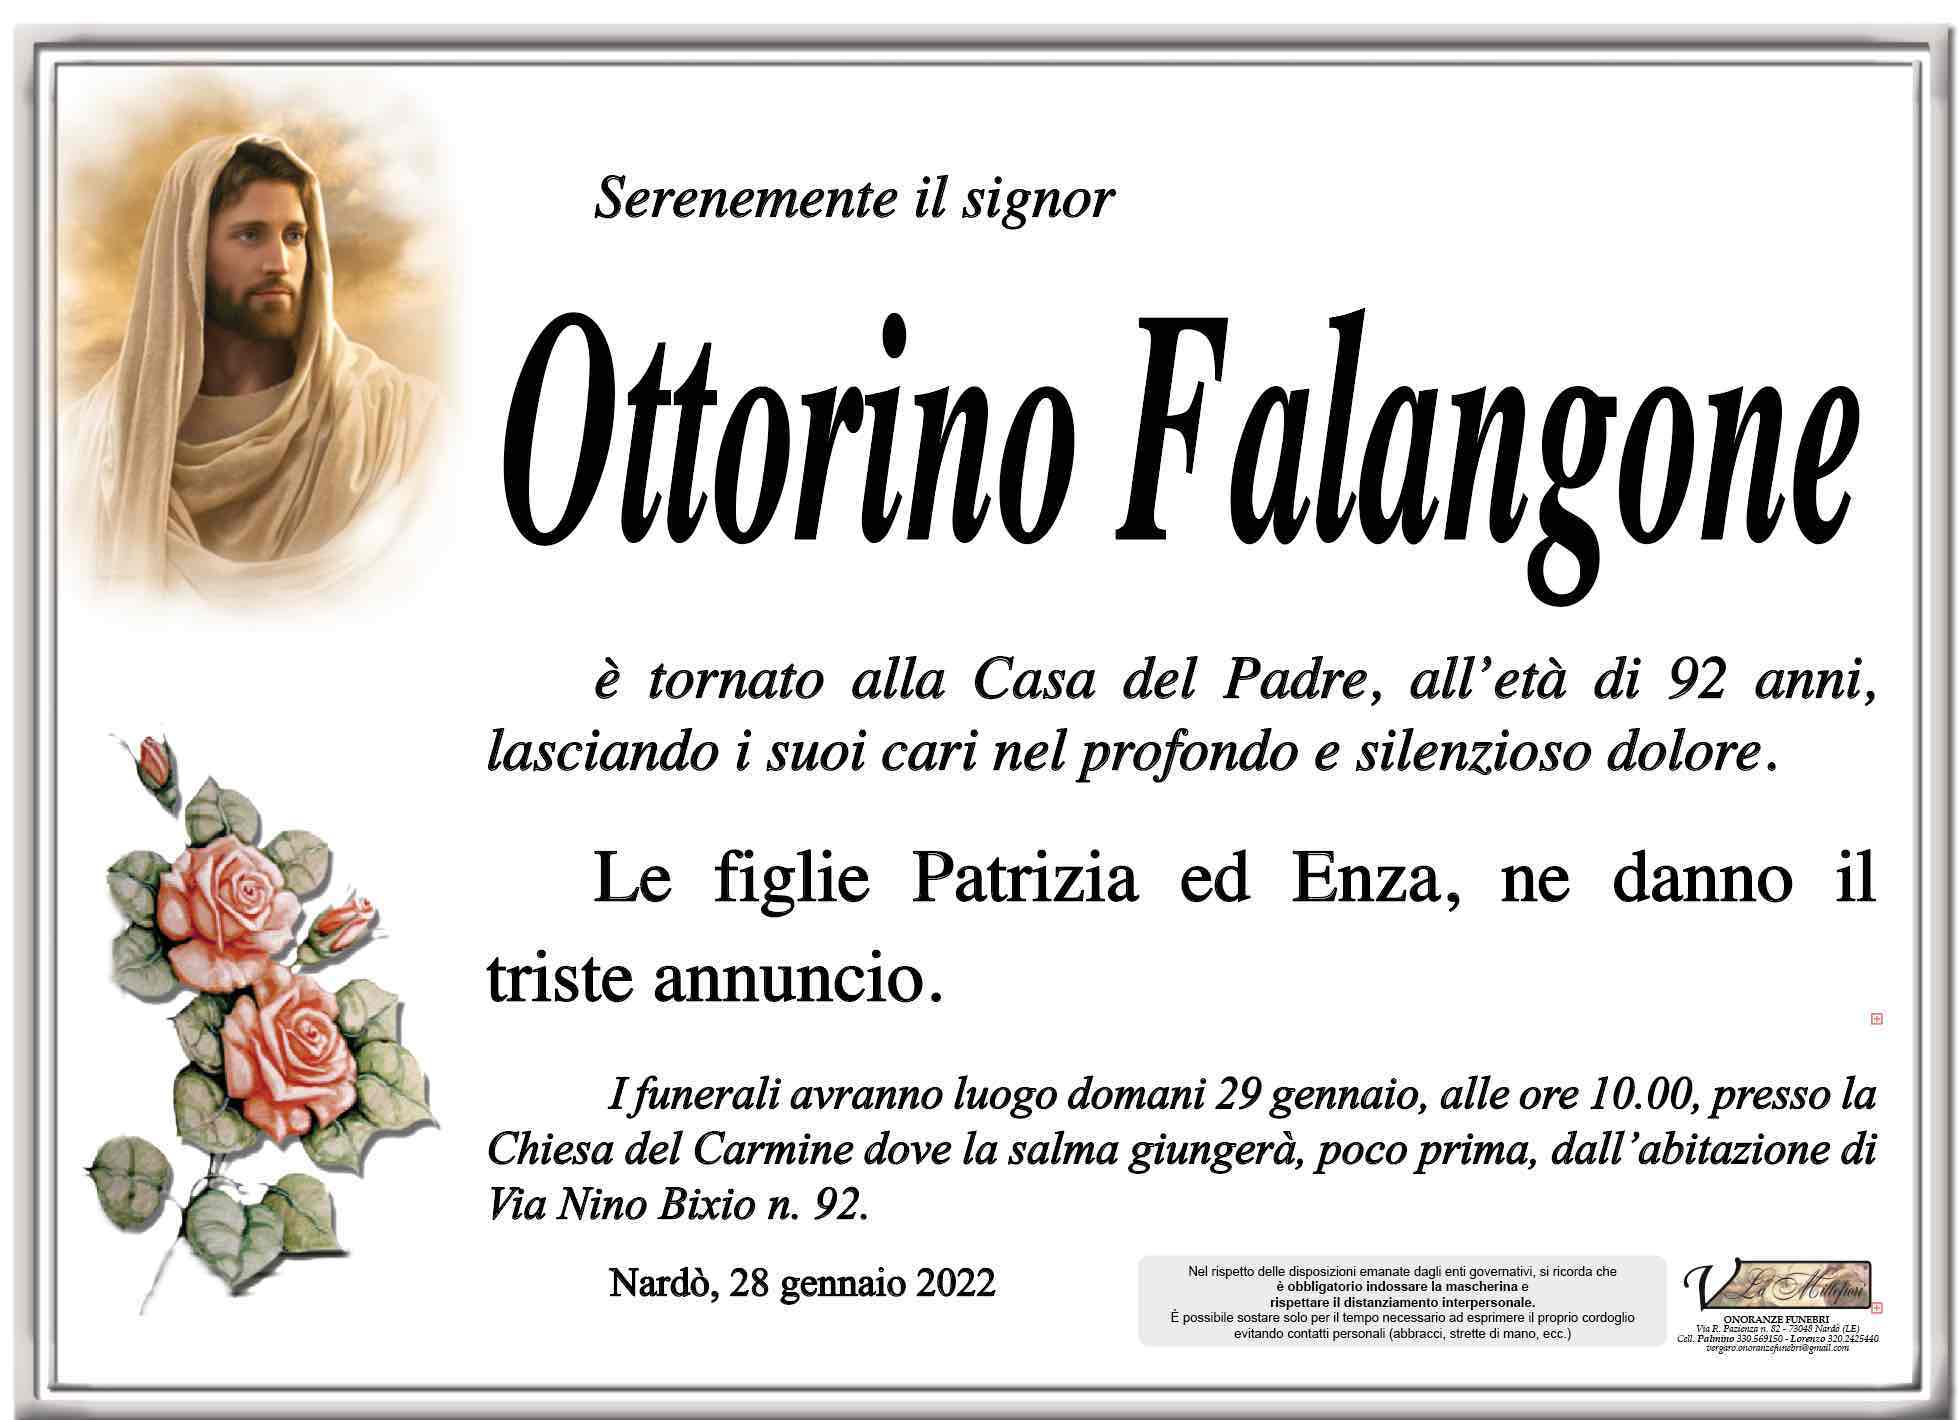 Ottorino Falangone